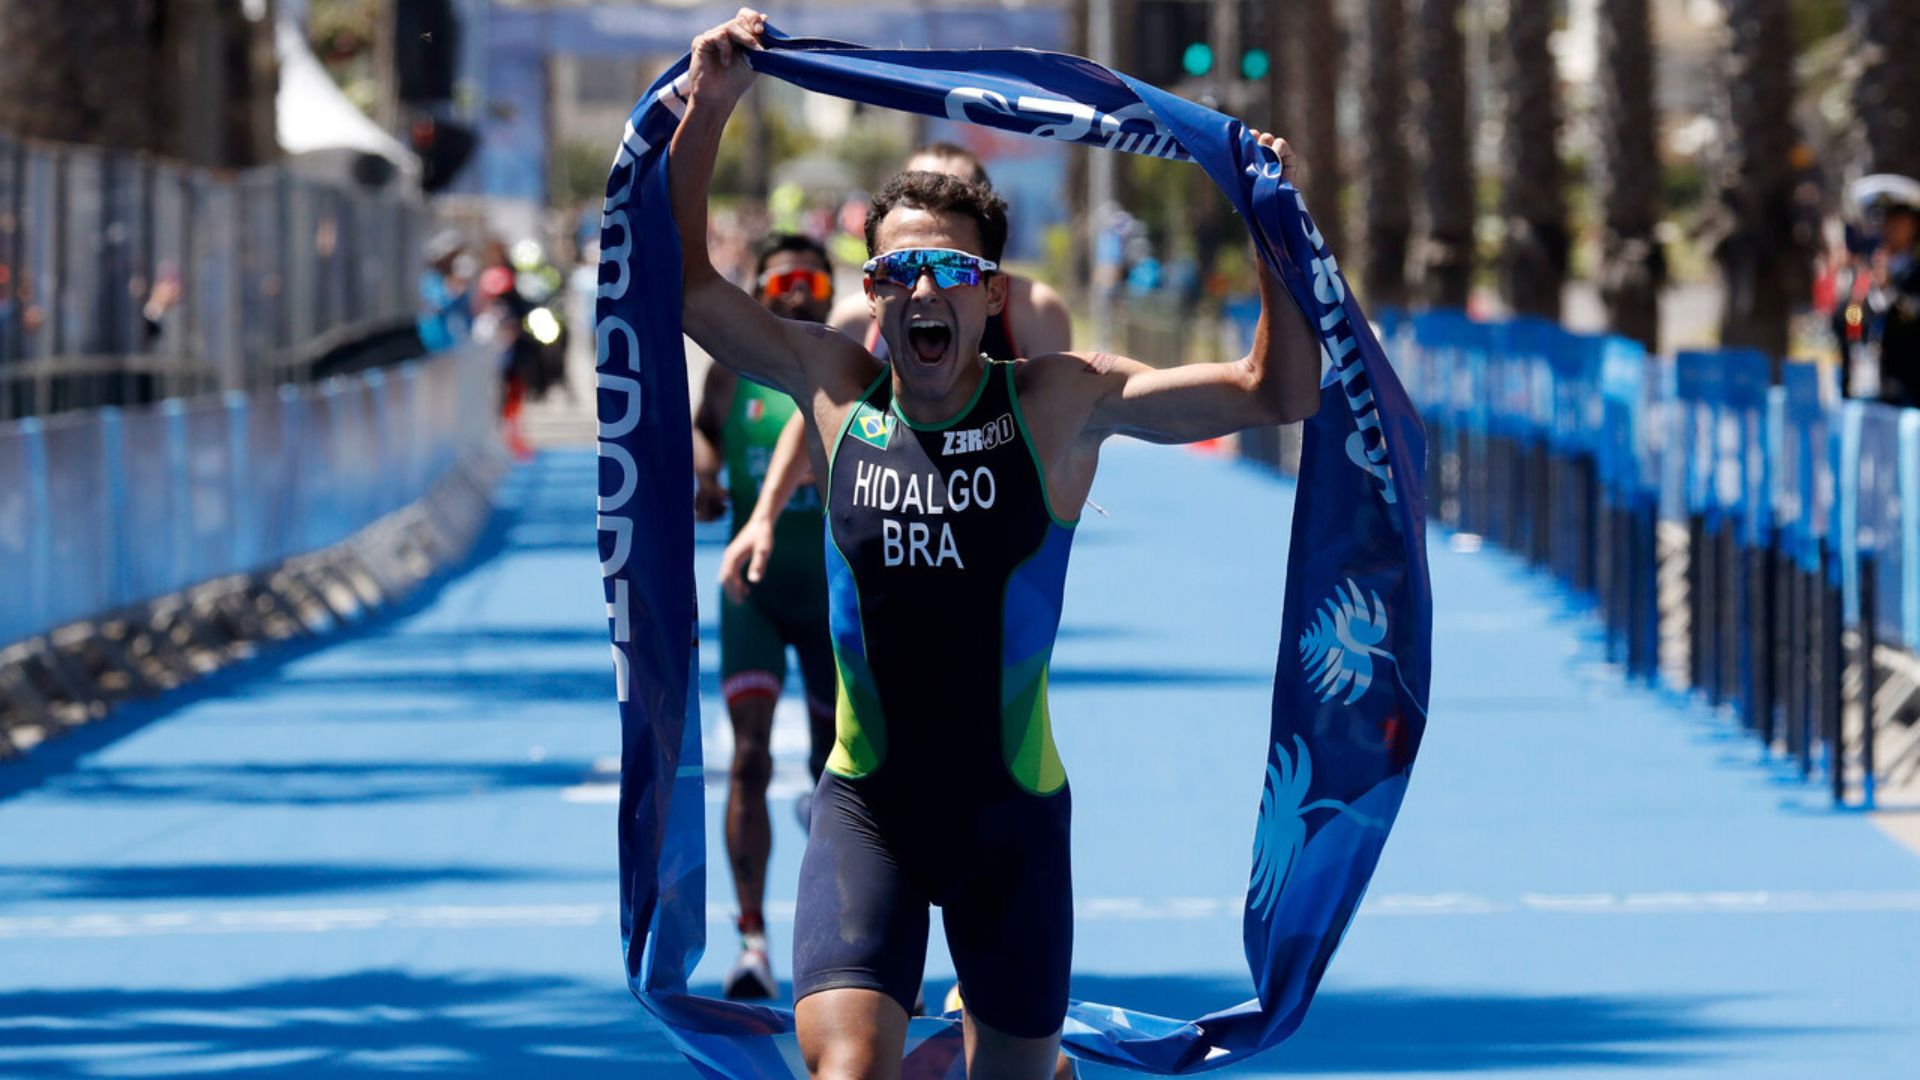 Emotional Victory for Brazilian Hidalgo in Pan American Triathlon